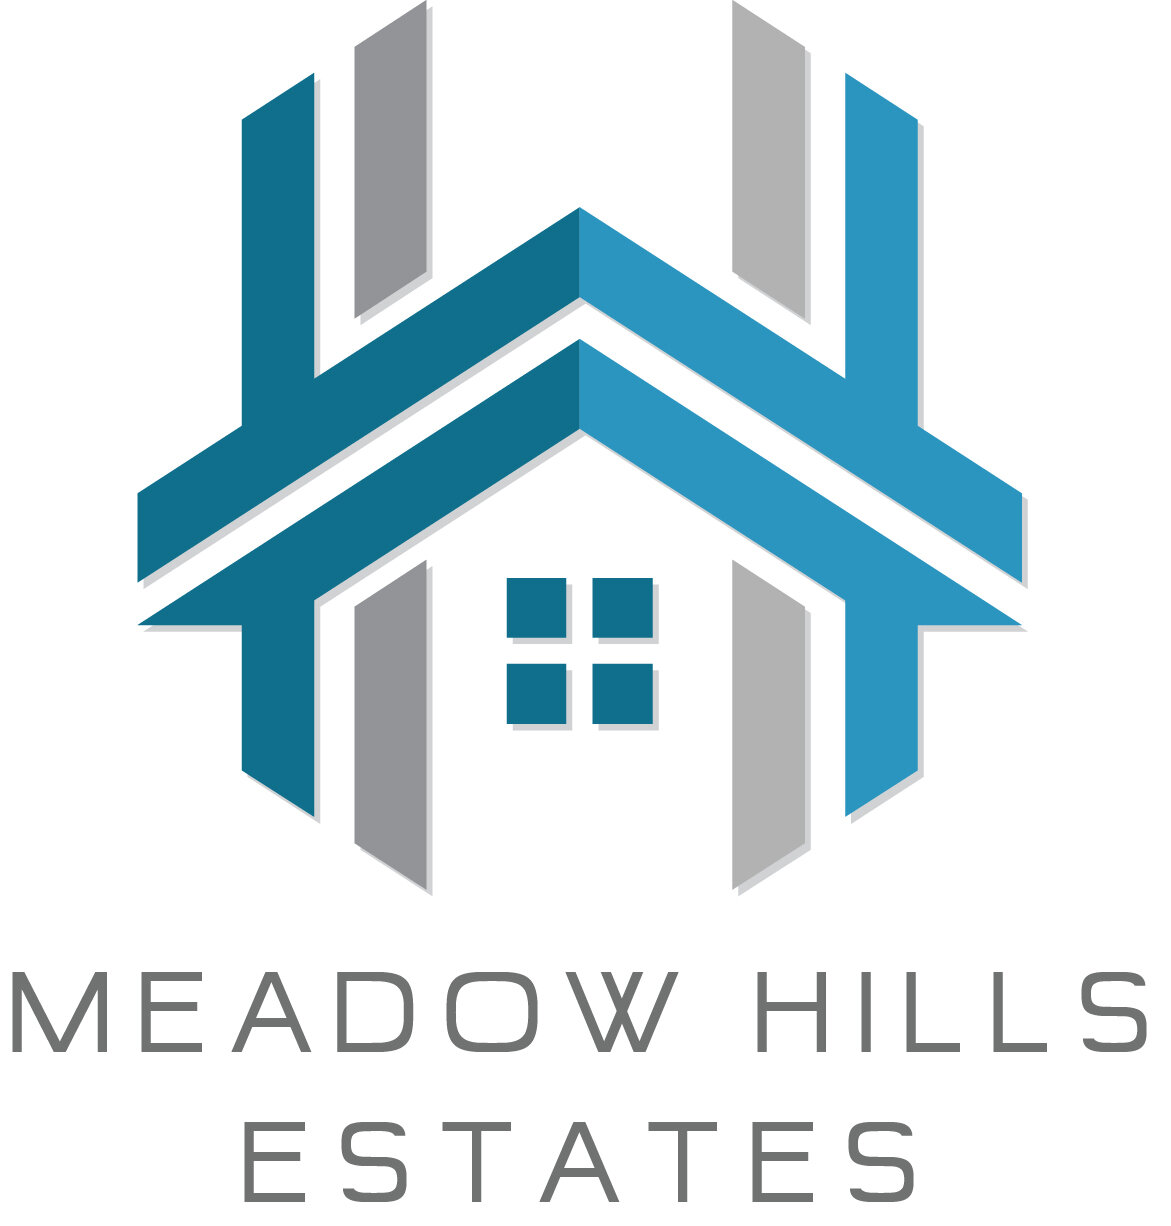 Meadow Hills Estates